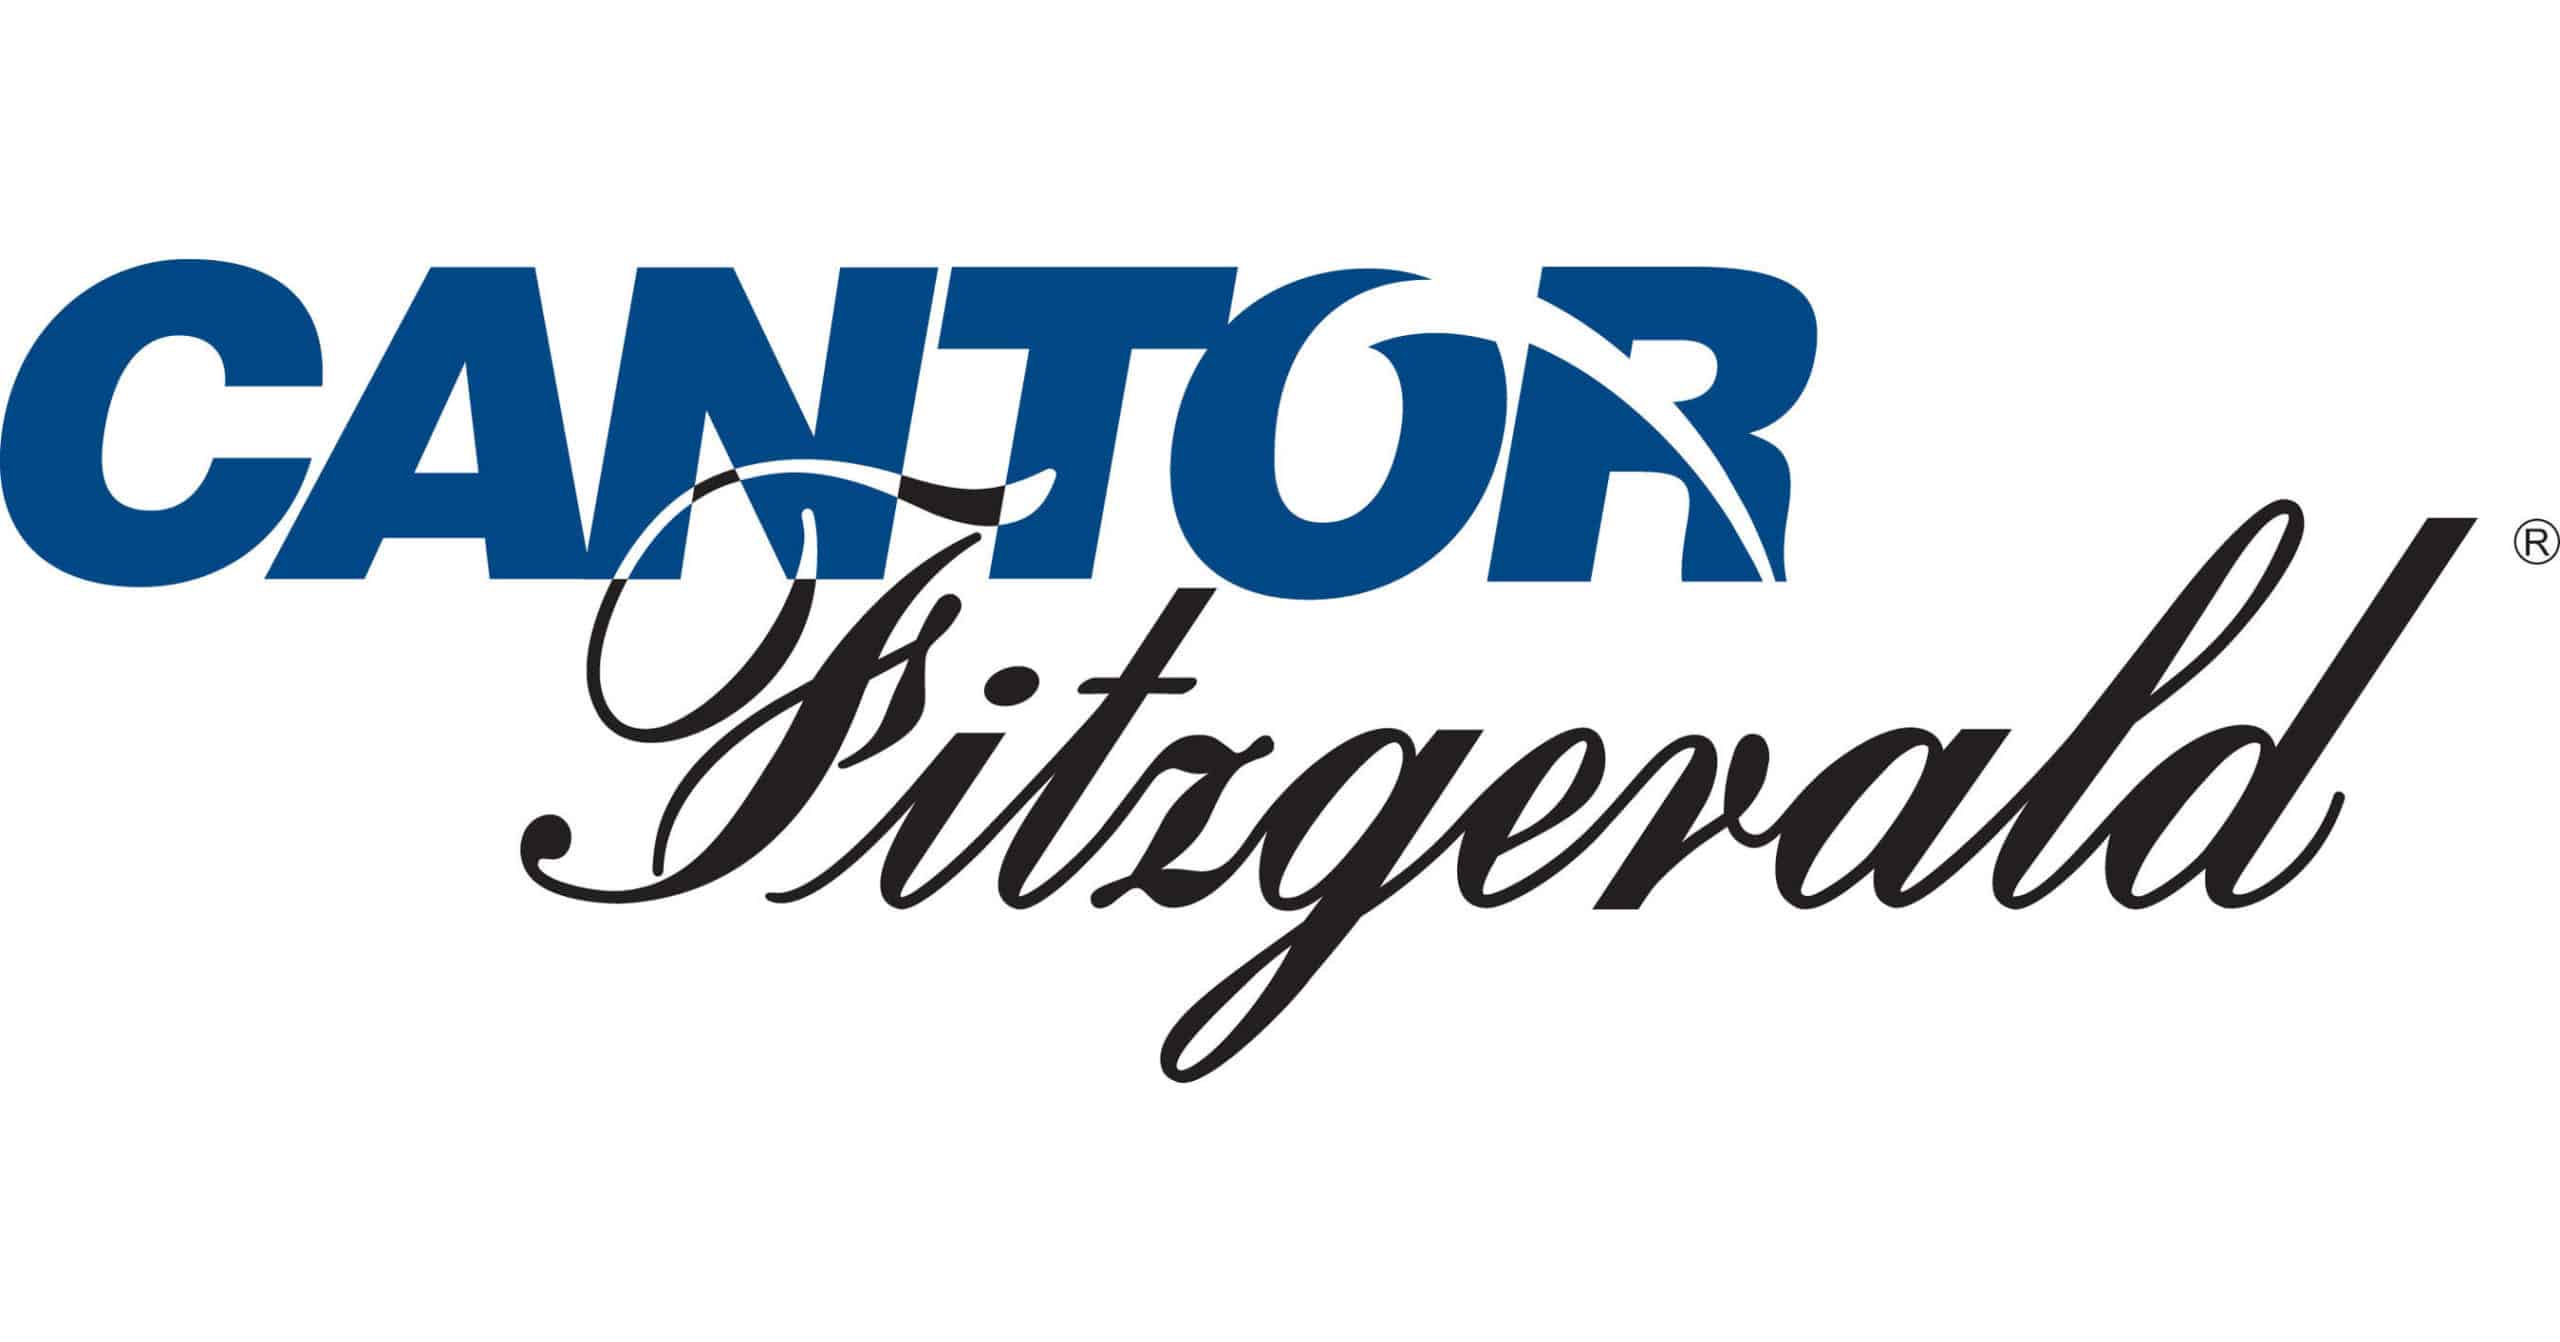 Cantor Fitzgerald Logo.  (PRNewsFoto/Cantor Fitzgerald)